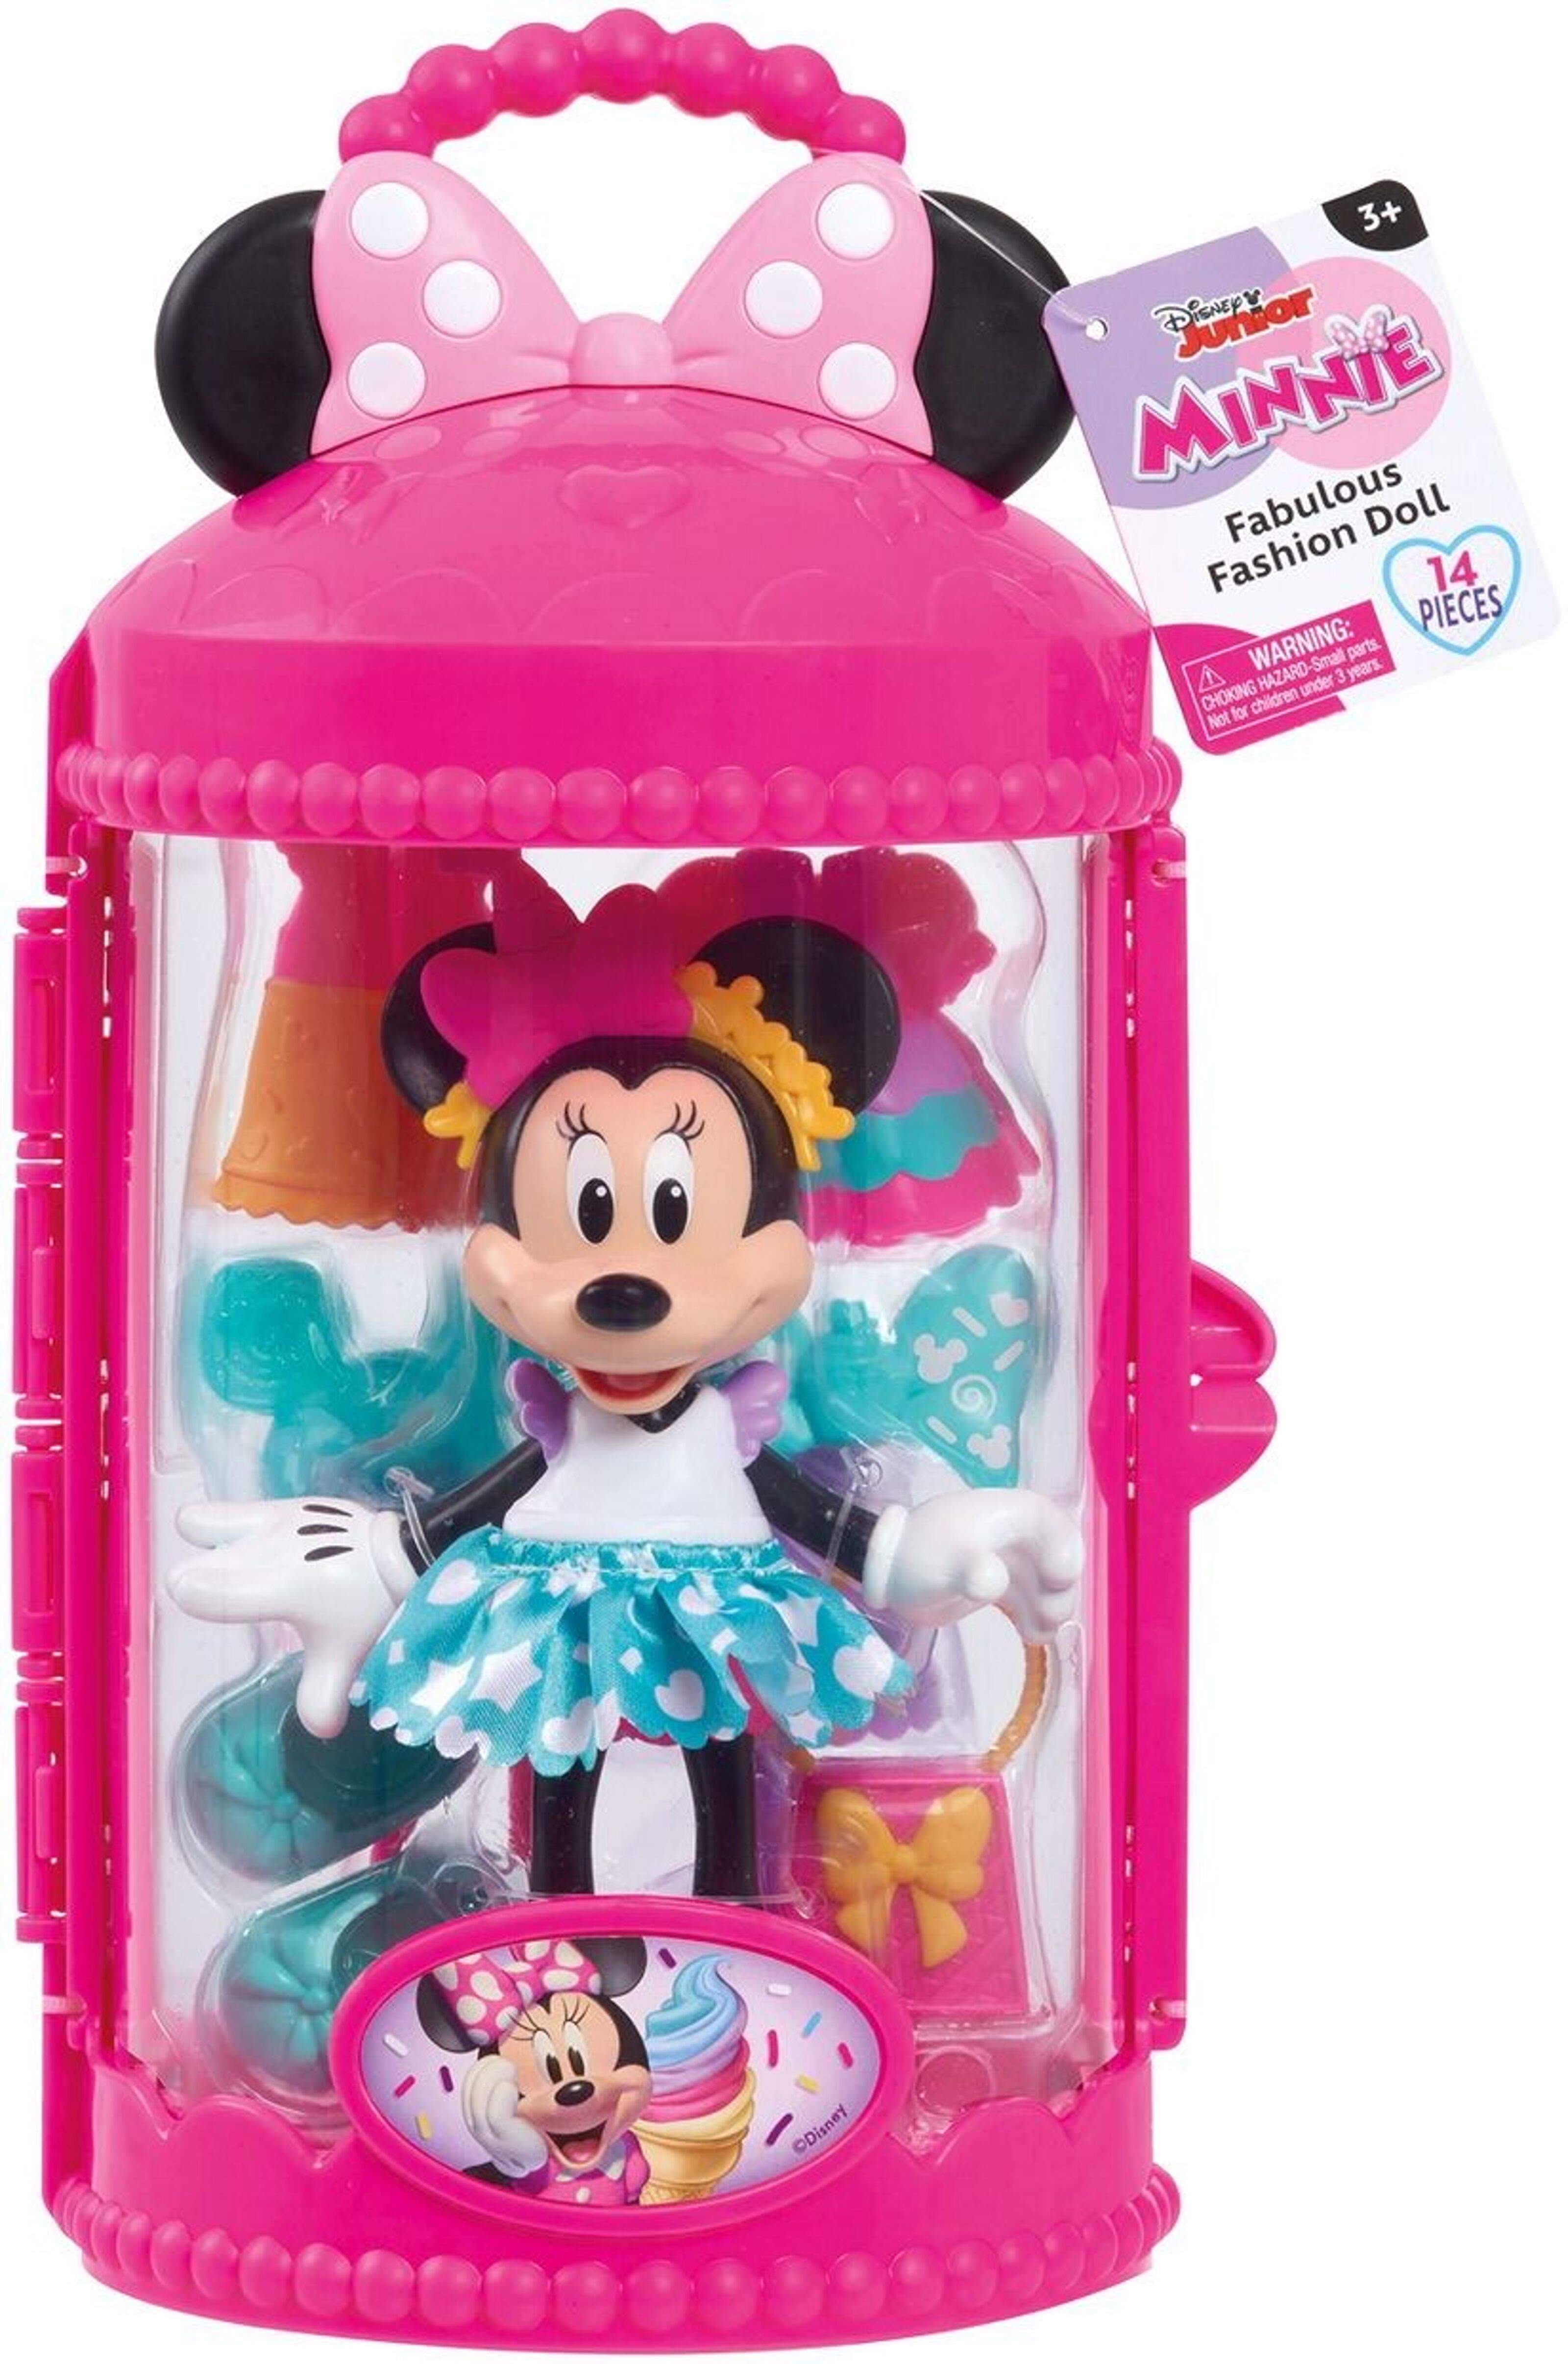 IMC Toys Minnie - Maison De Minnie